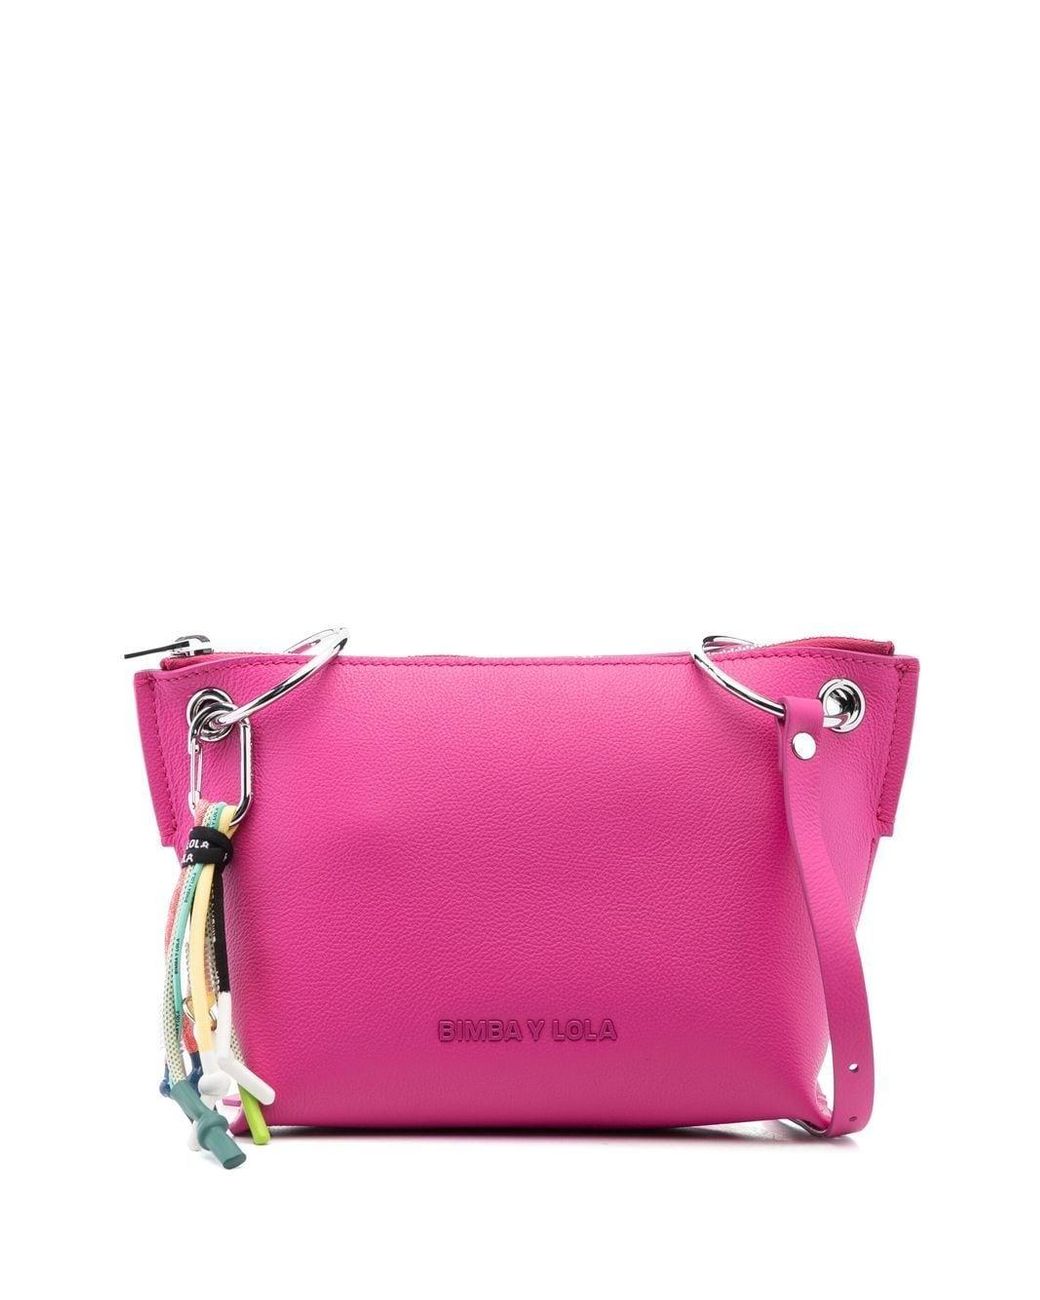 Bimba Y Lola Medium Leather Trapezium Bag in Pink | Lyst